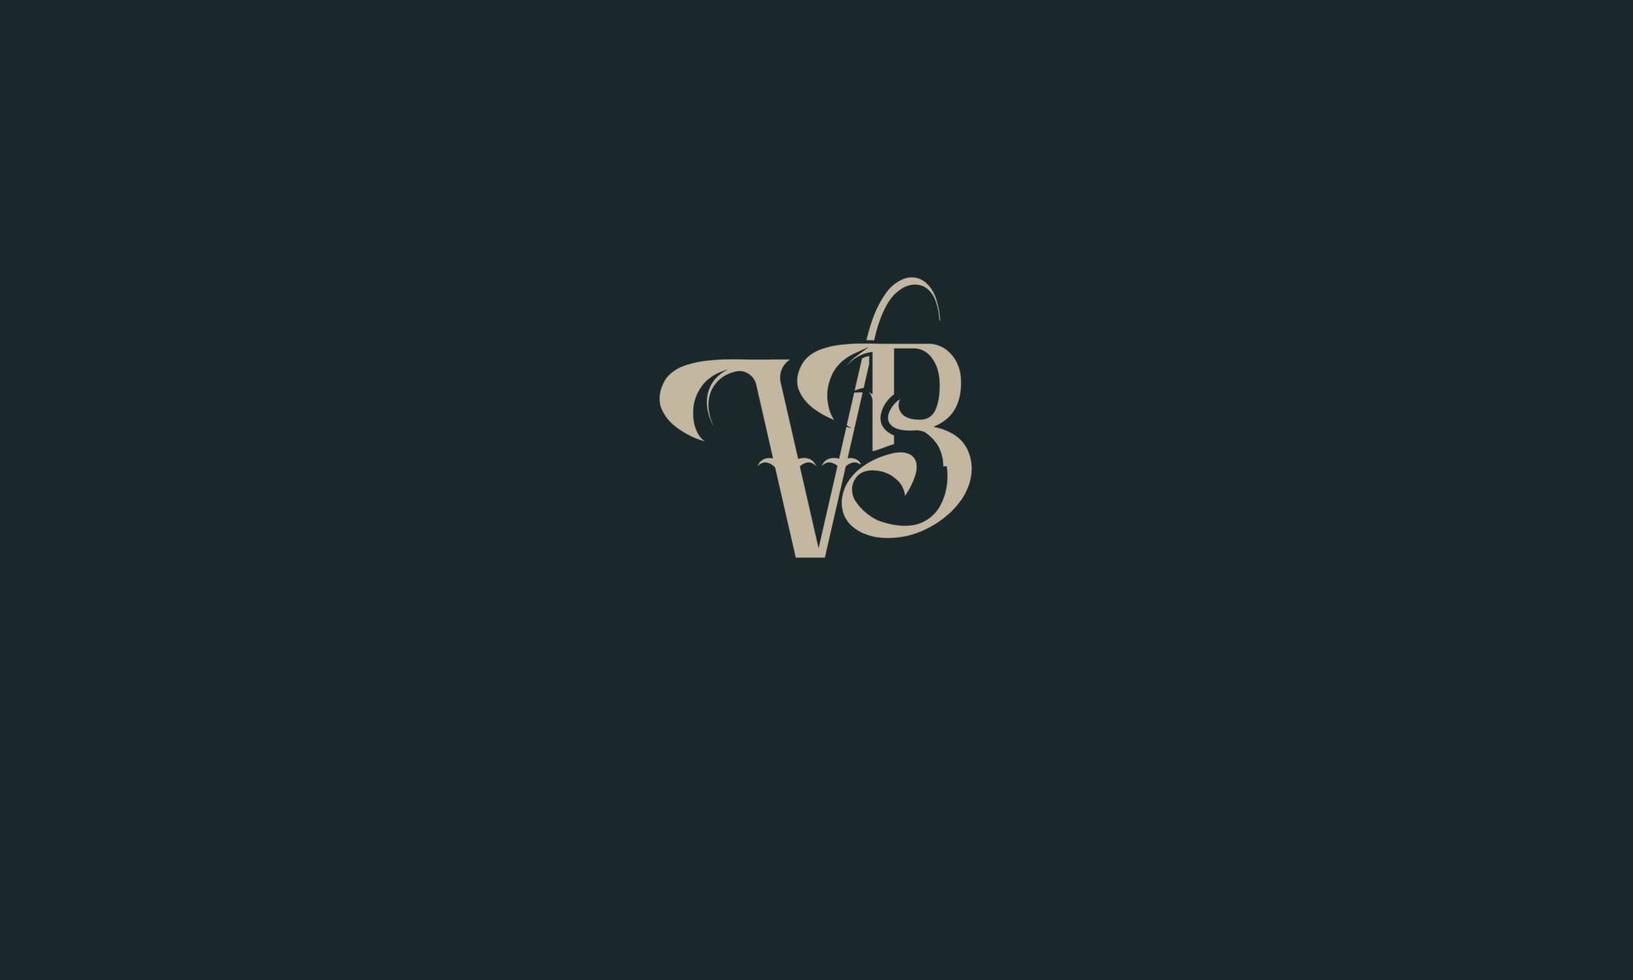 alphabet lettres initiales monogramme logo vb, bv, v et b vecteur